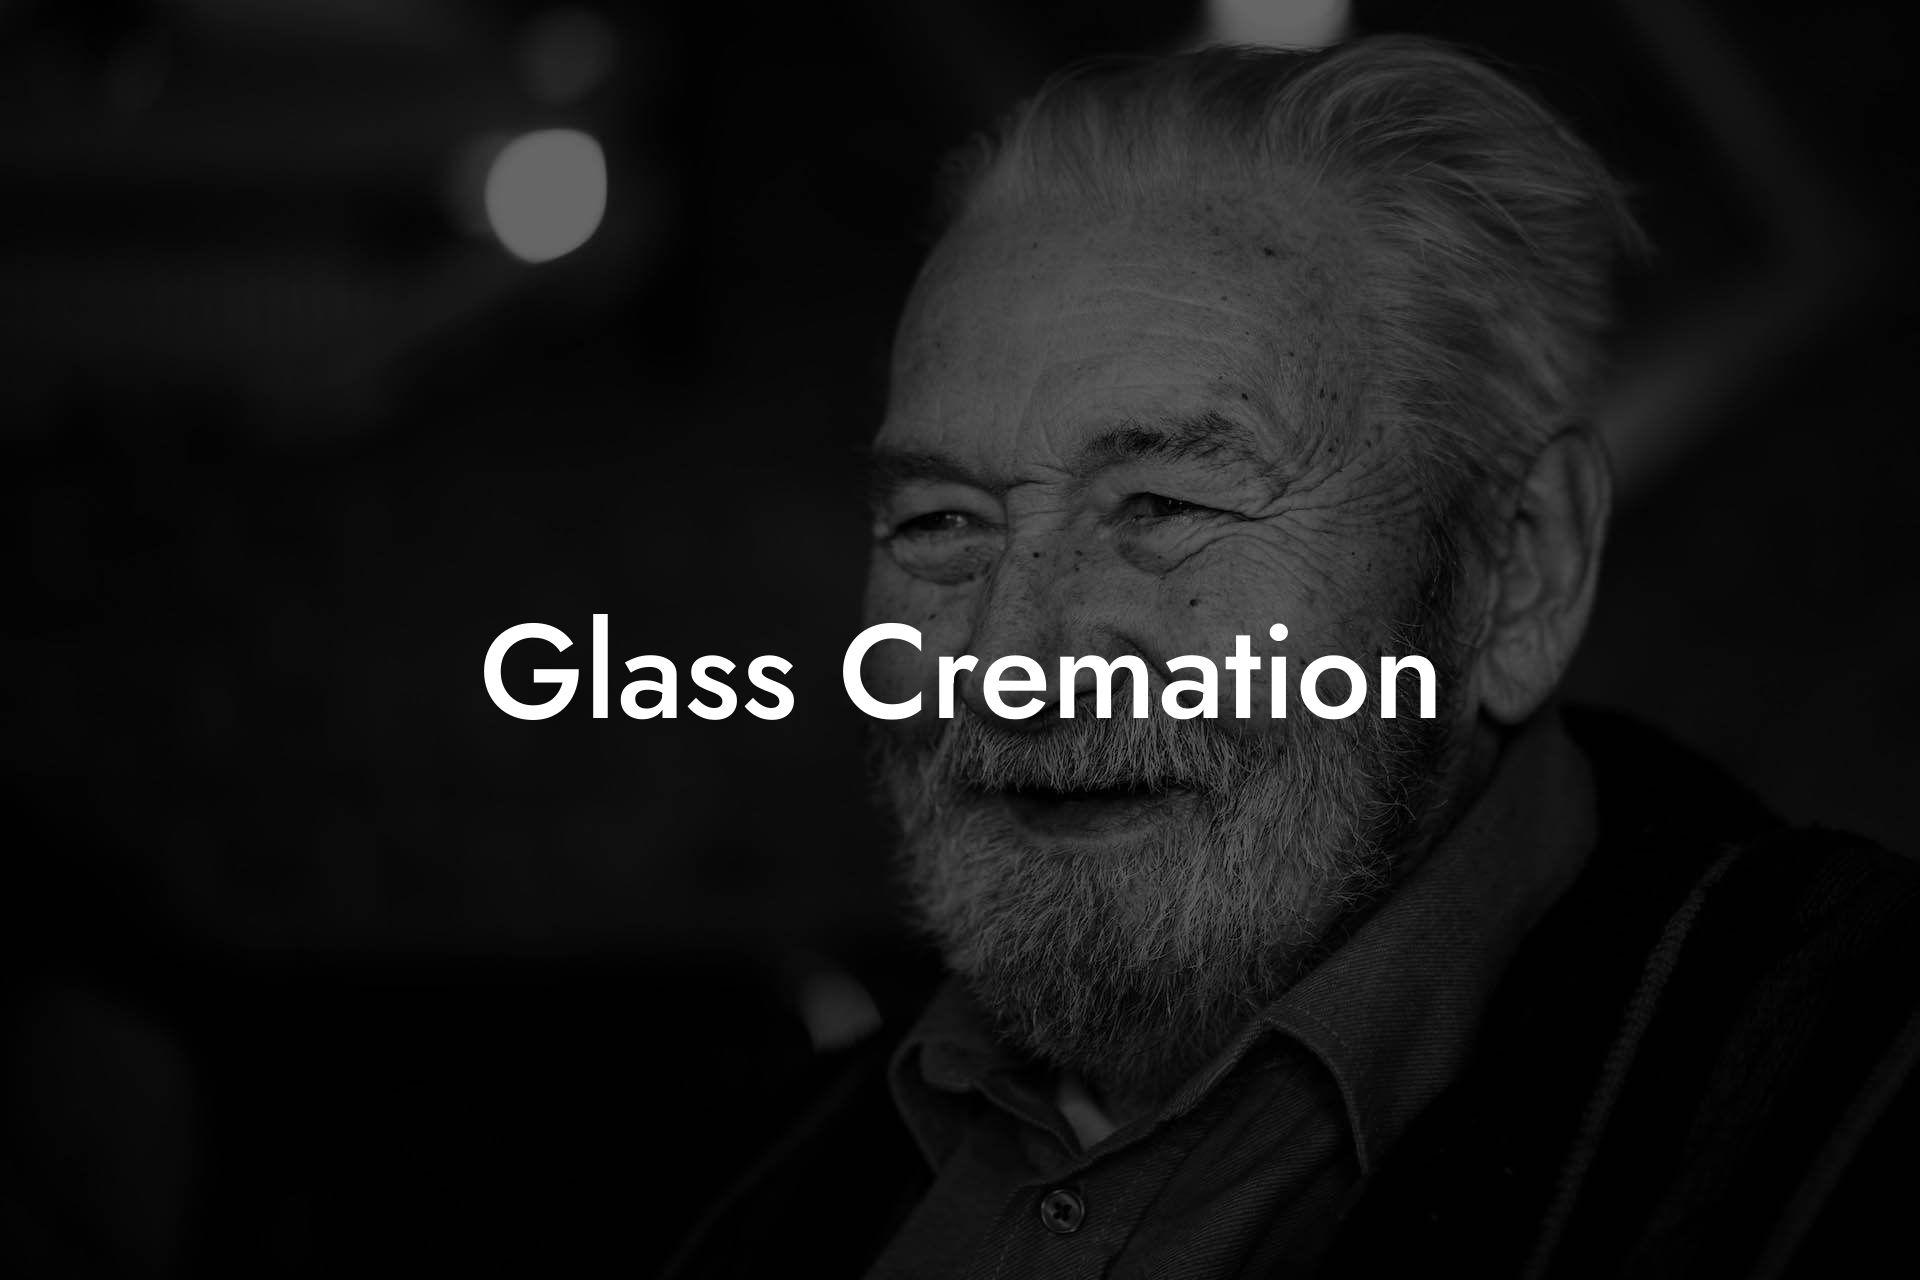 Glass Cremation